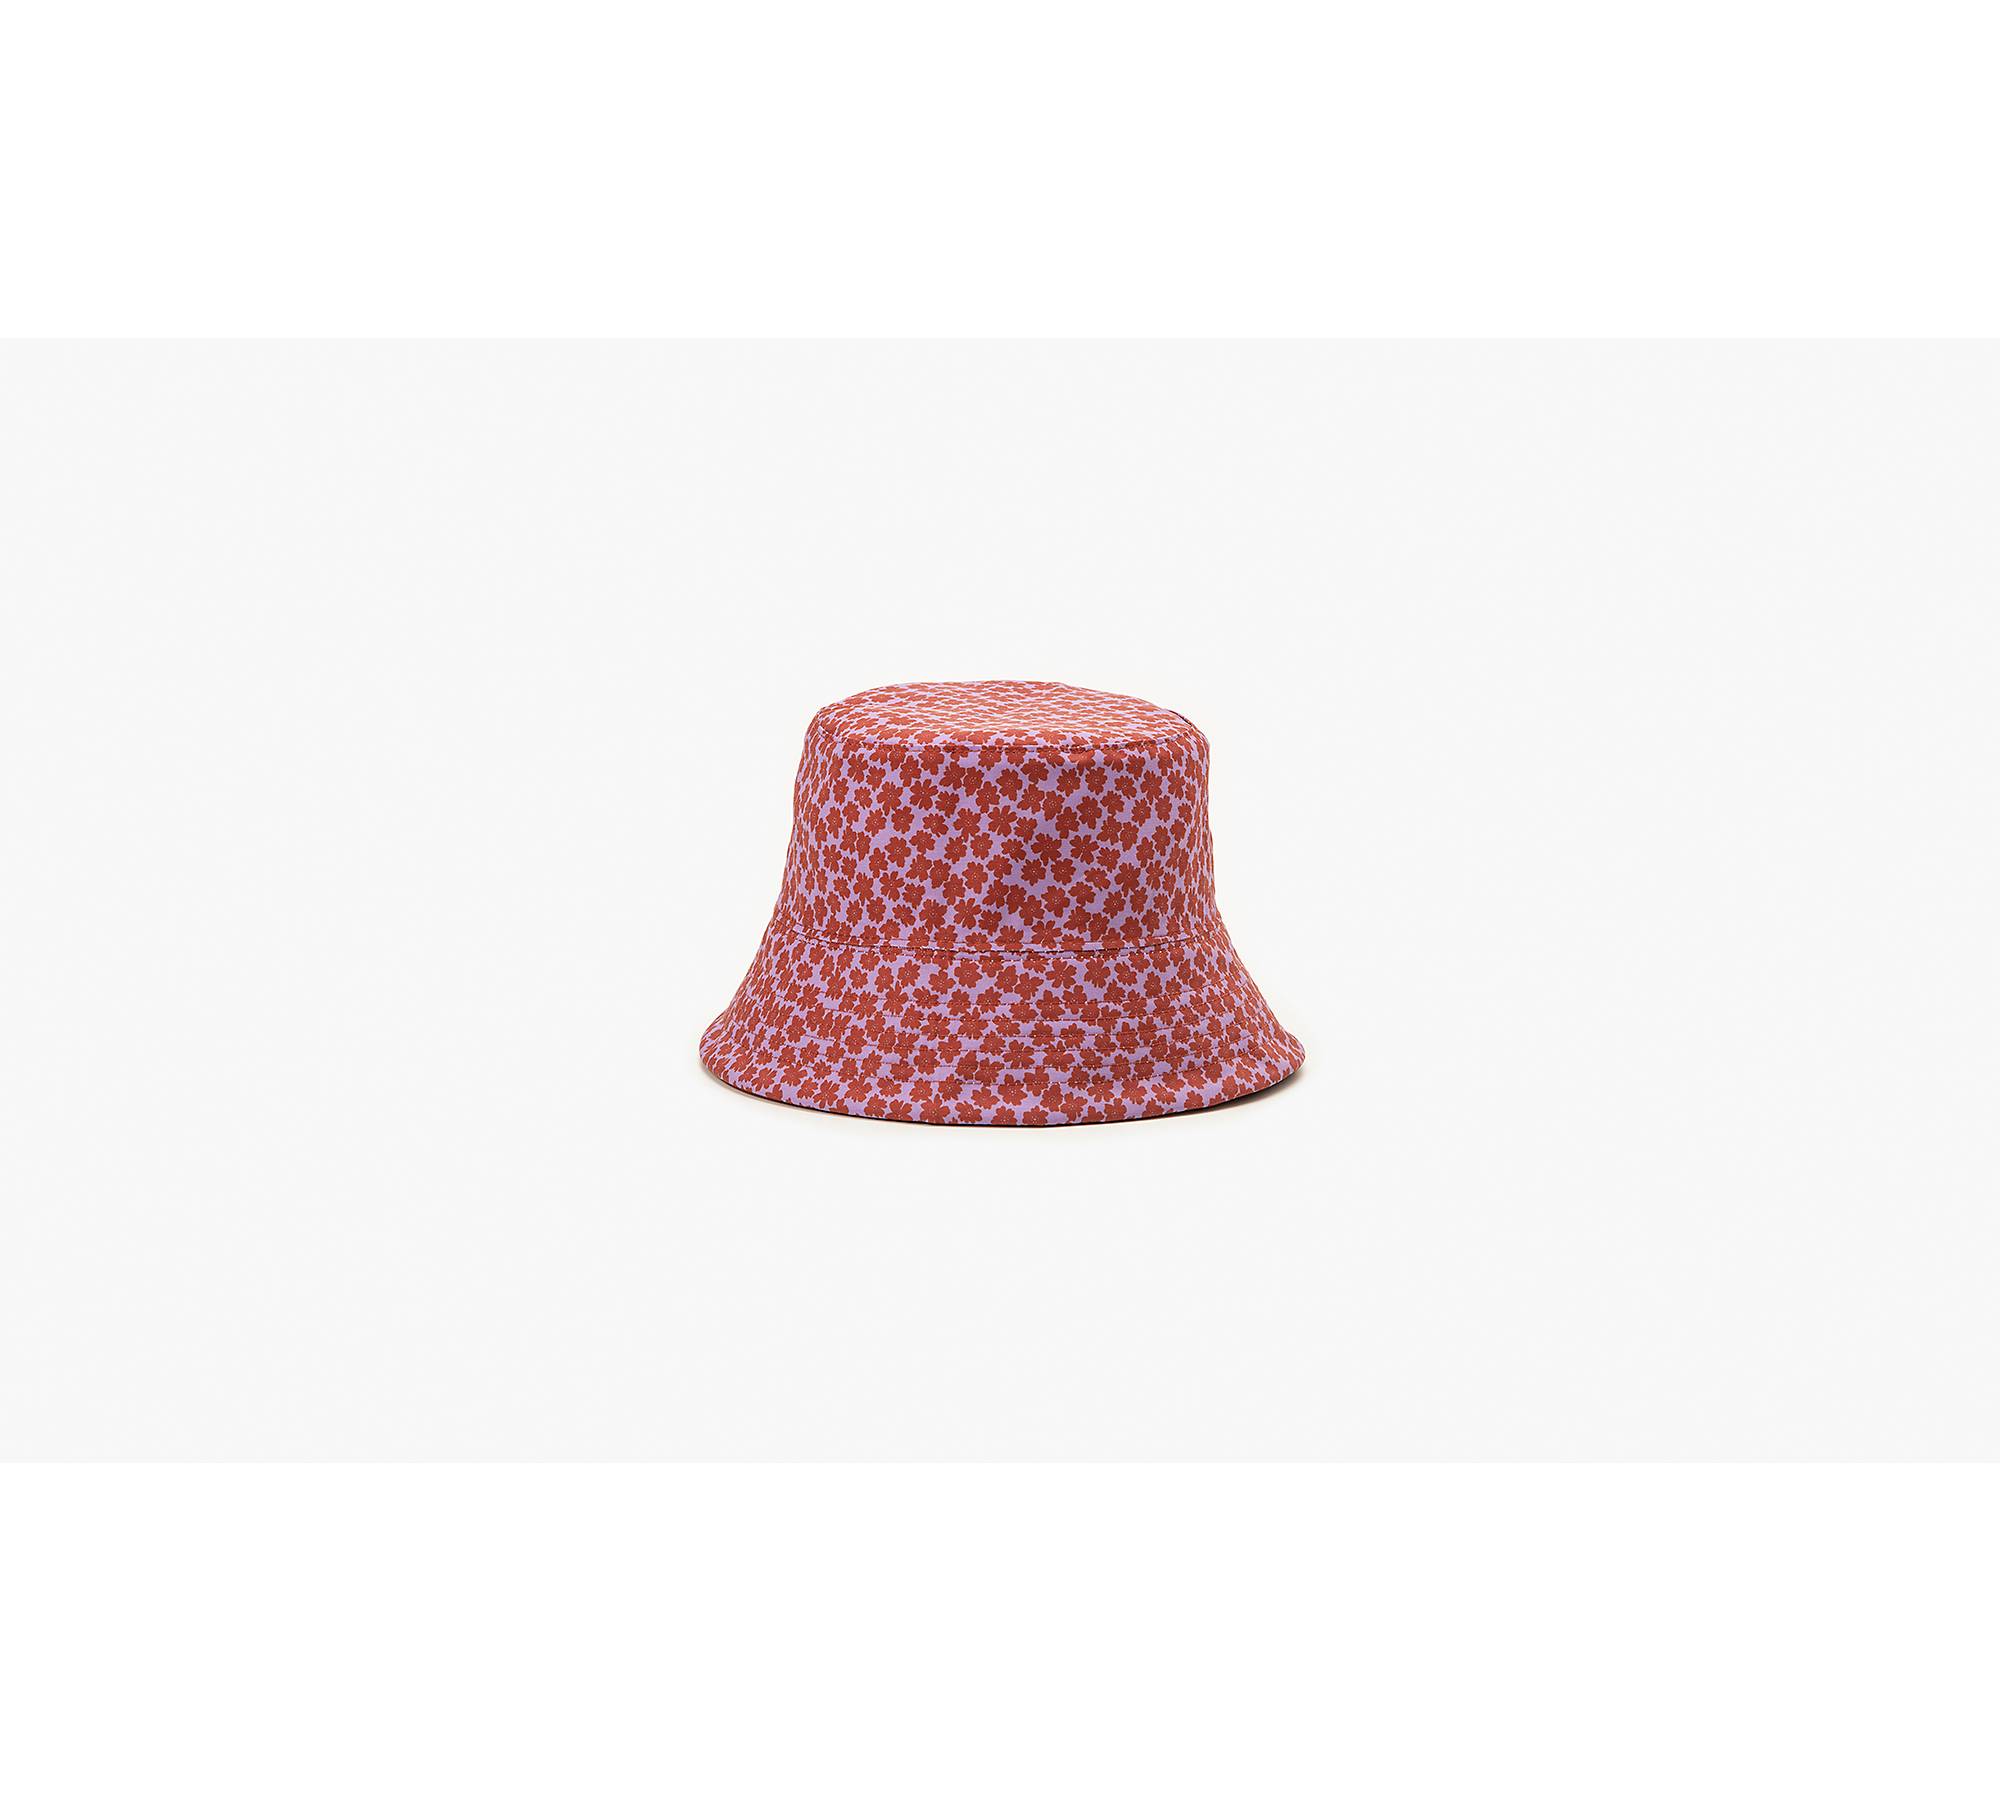 All-Black Designer Bucket Hats : Dior's 90s bucket hat